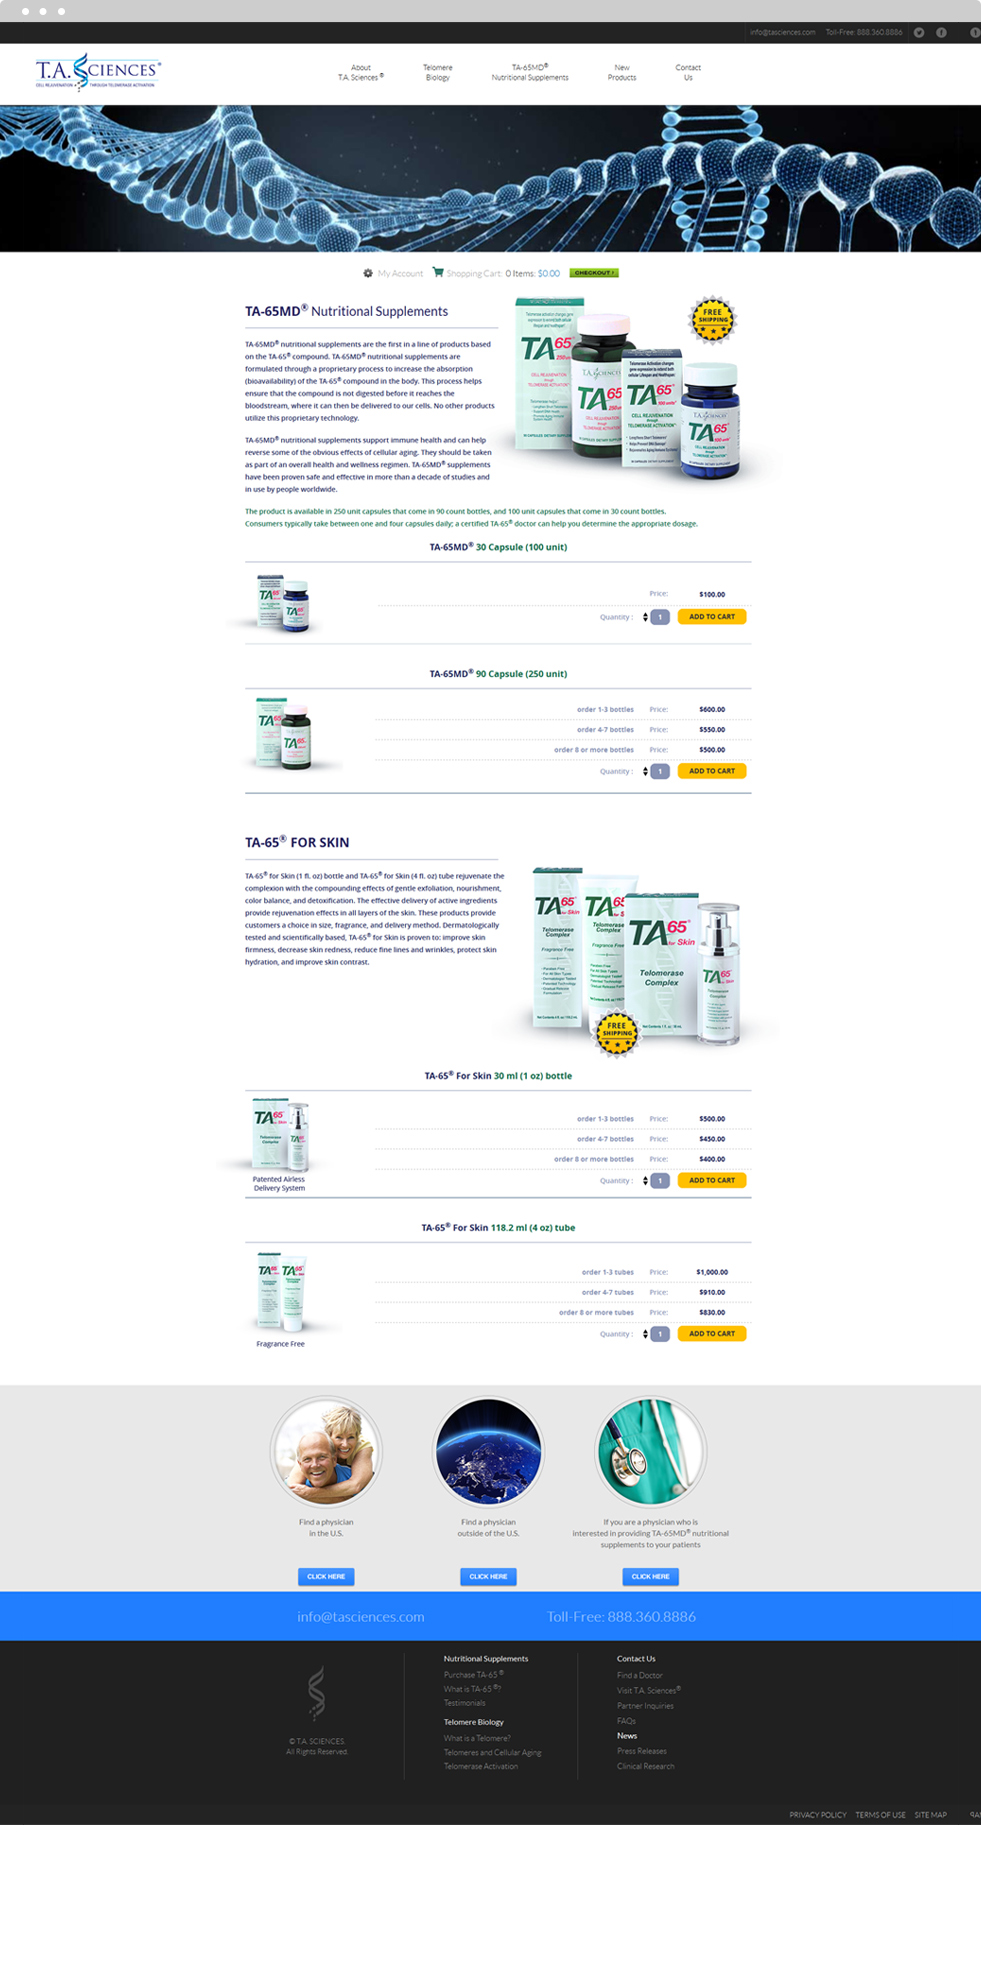 Medical E-Commerce Website Design - T.A. Sciences - Homepage